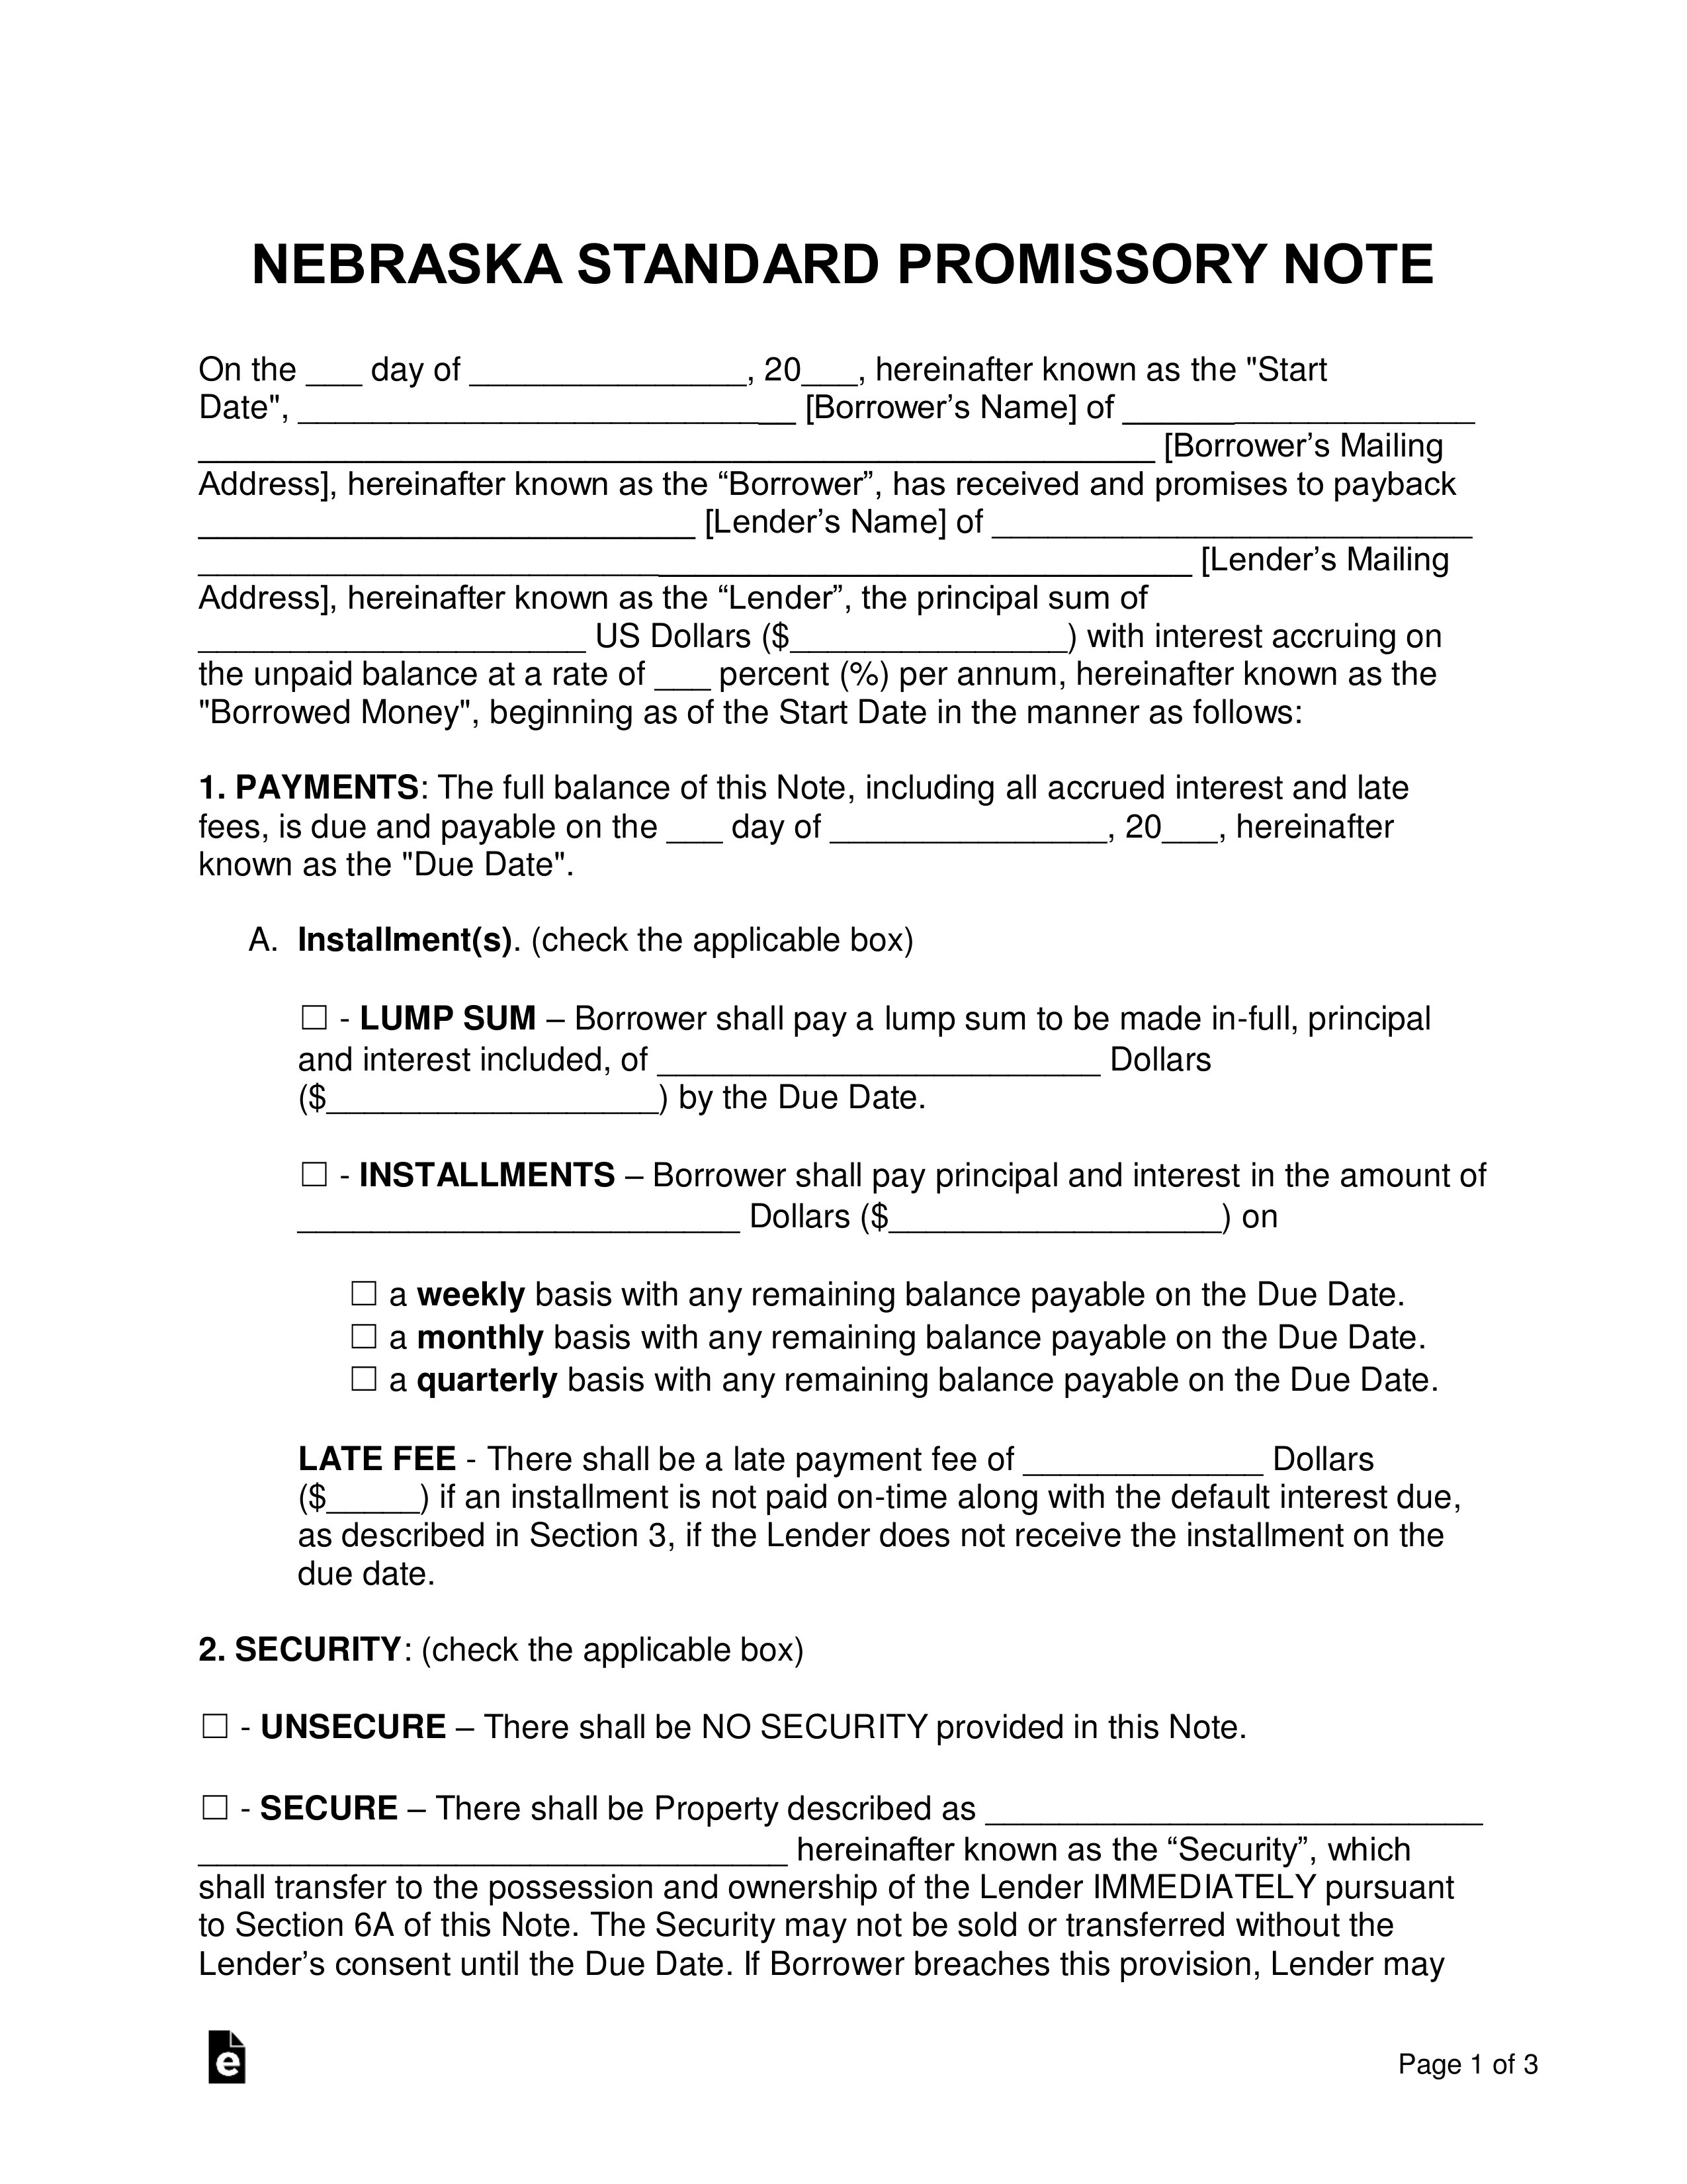 Nebraska Promissory Note Templates (2)